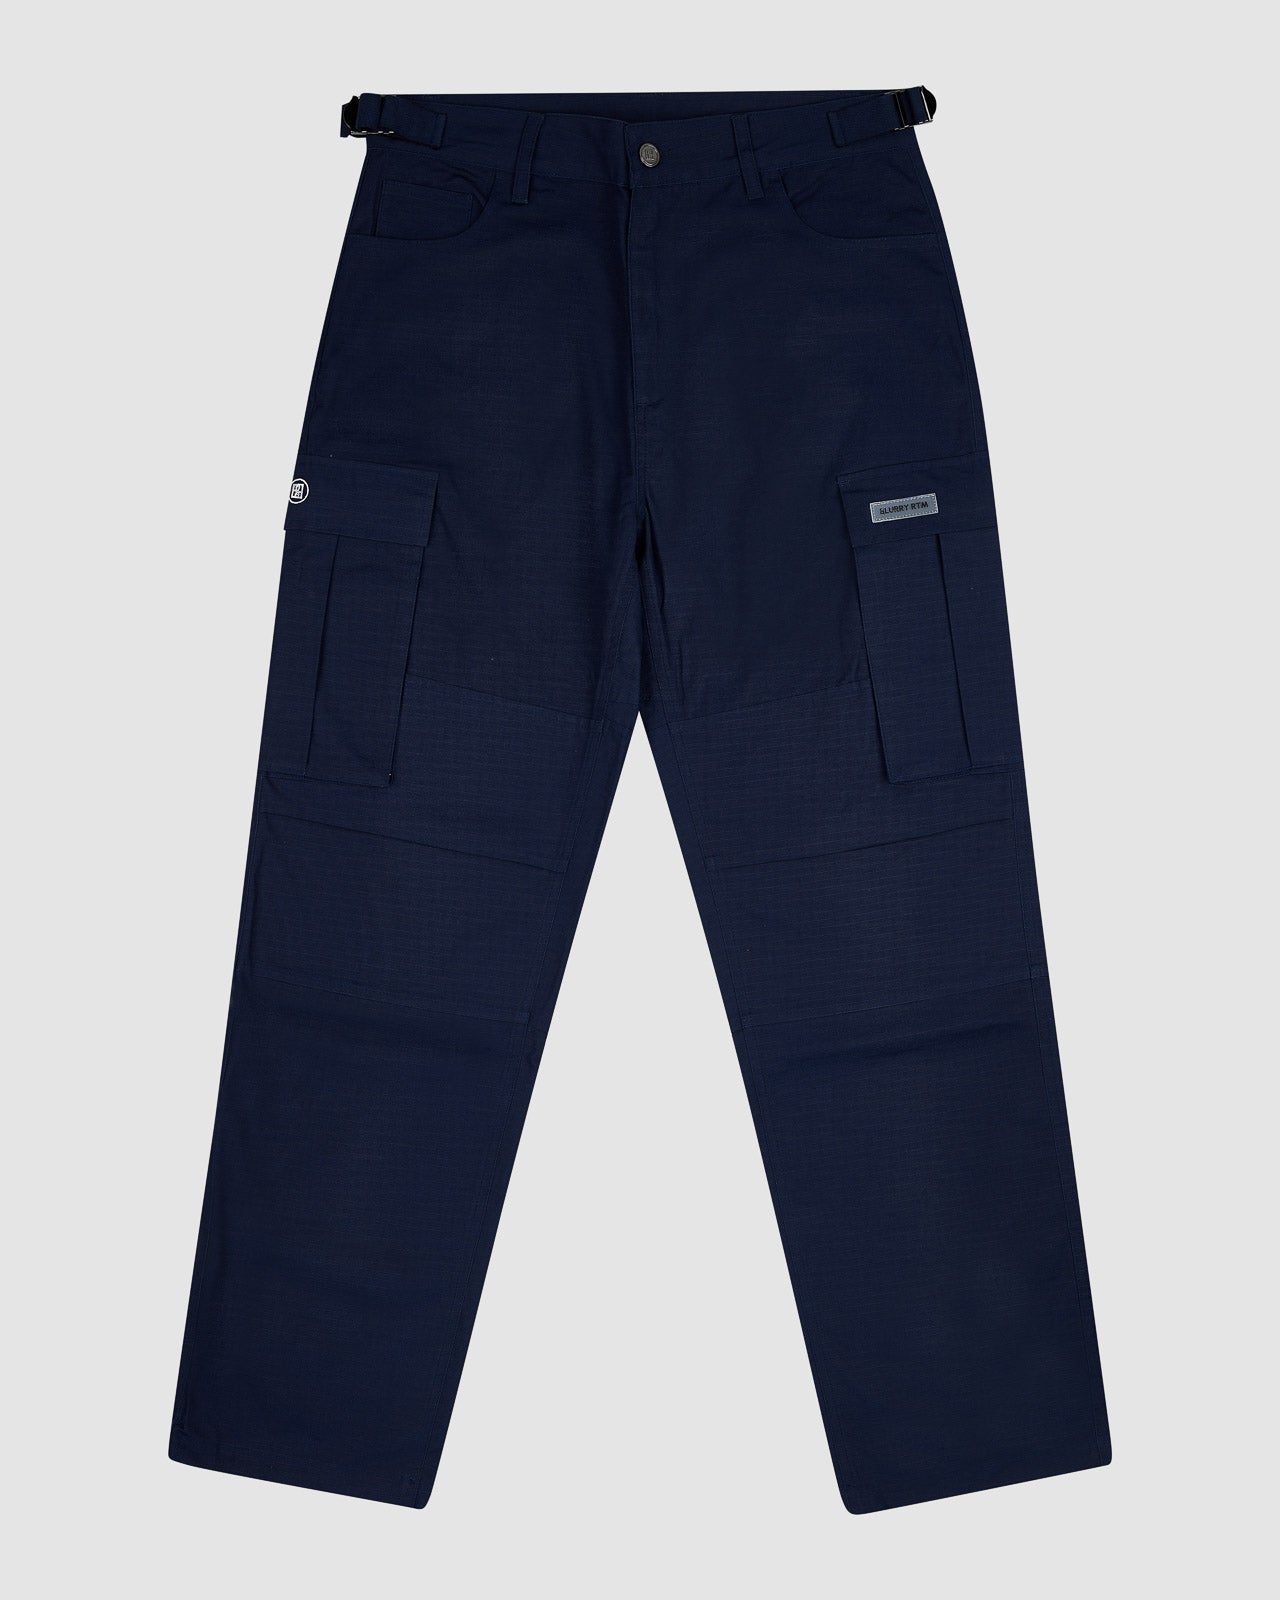 BLURRY RTM Cargo Pants (Navy Blue)